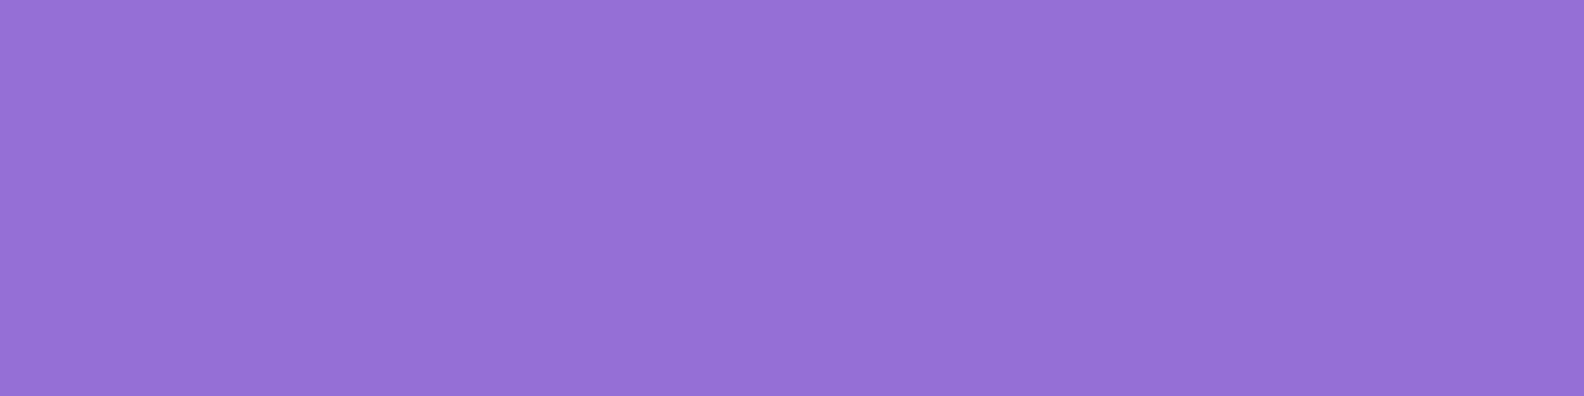 1584x396 Dark Pastel Purple Solid Color Background